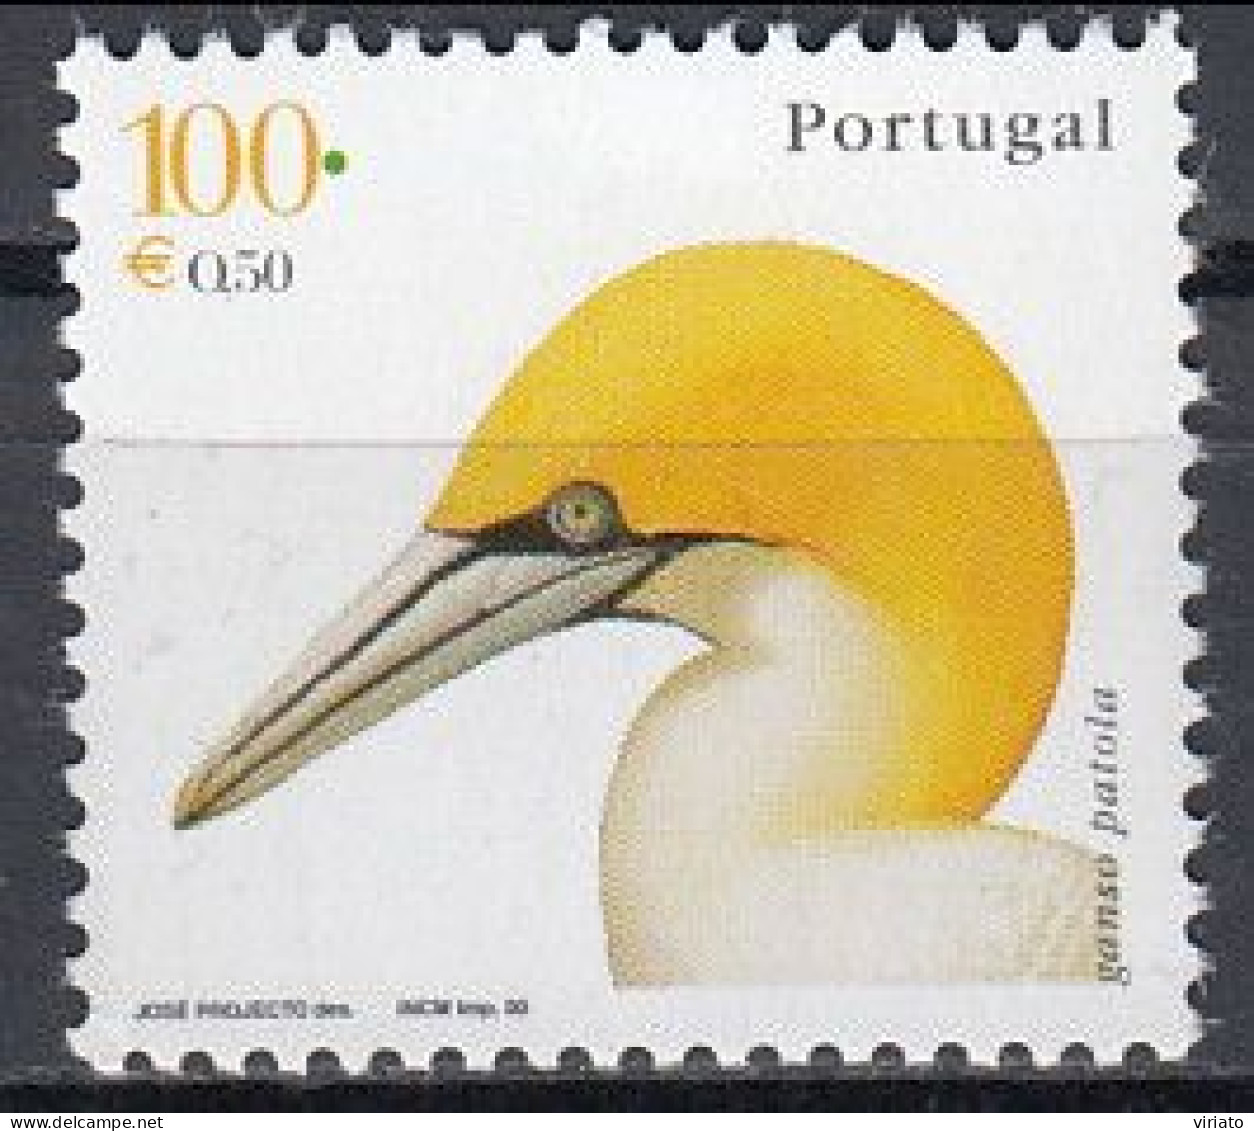 Portugal 2000 (AVE009) (MNH) (Mi 2391) - Northern Gannet (Morus Bassanus) - Albatros